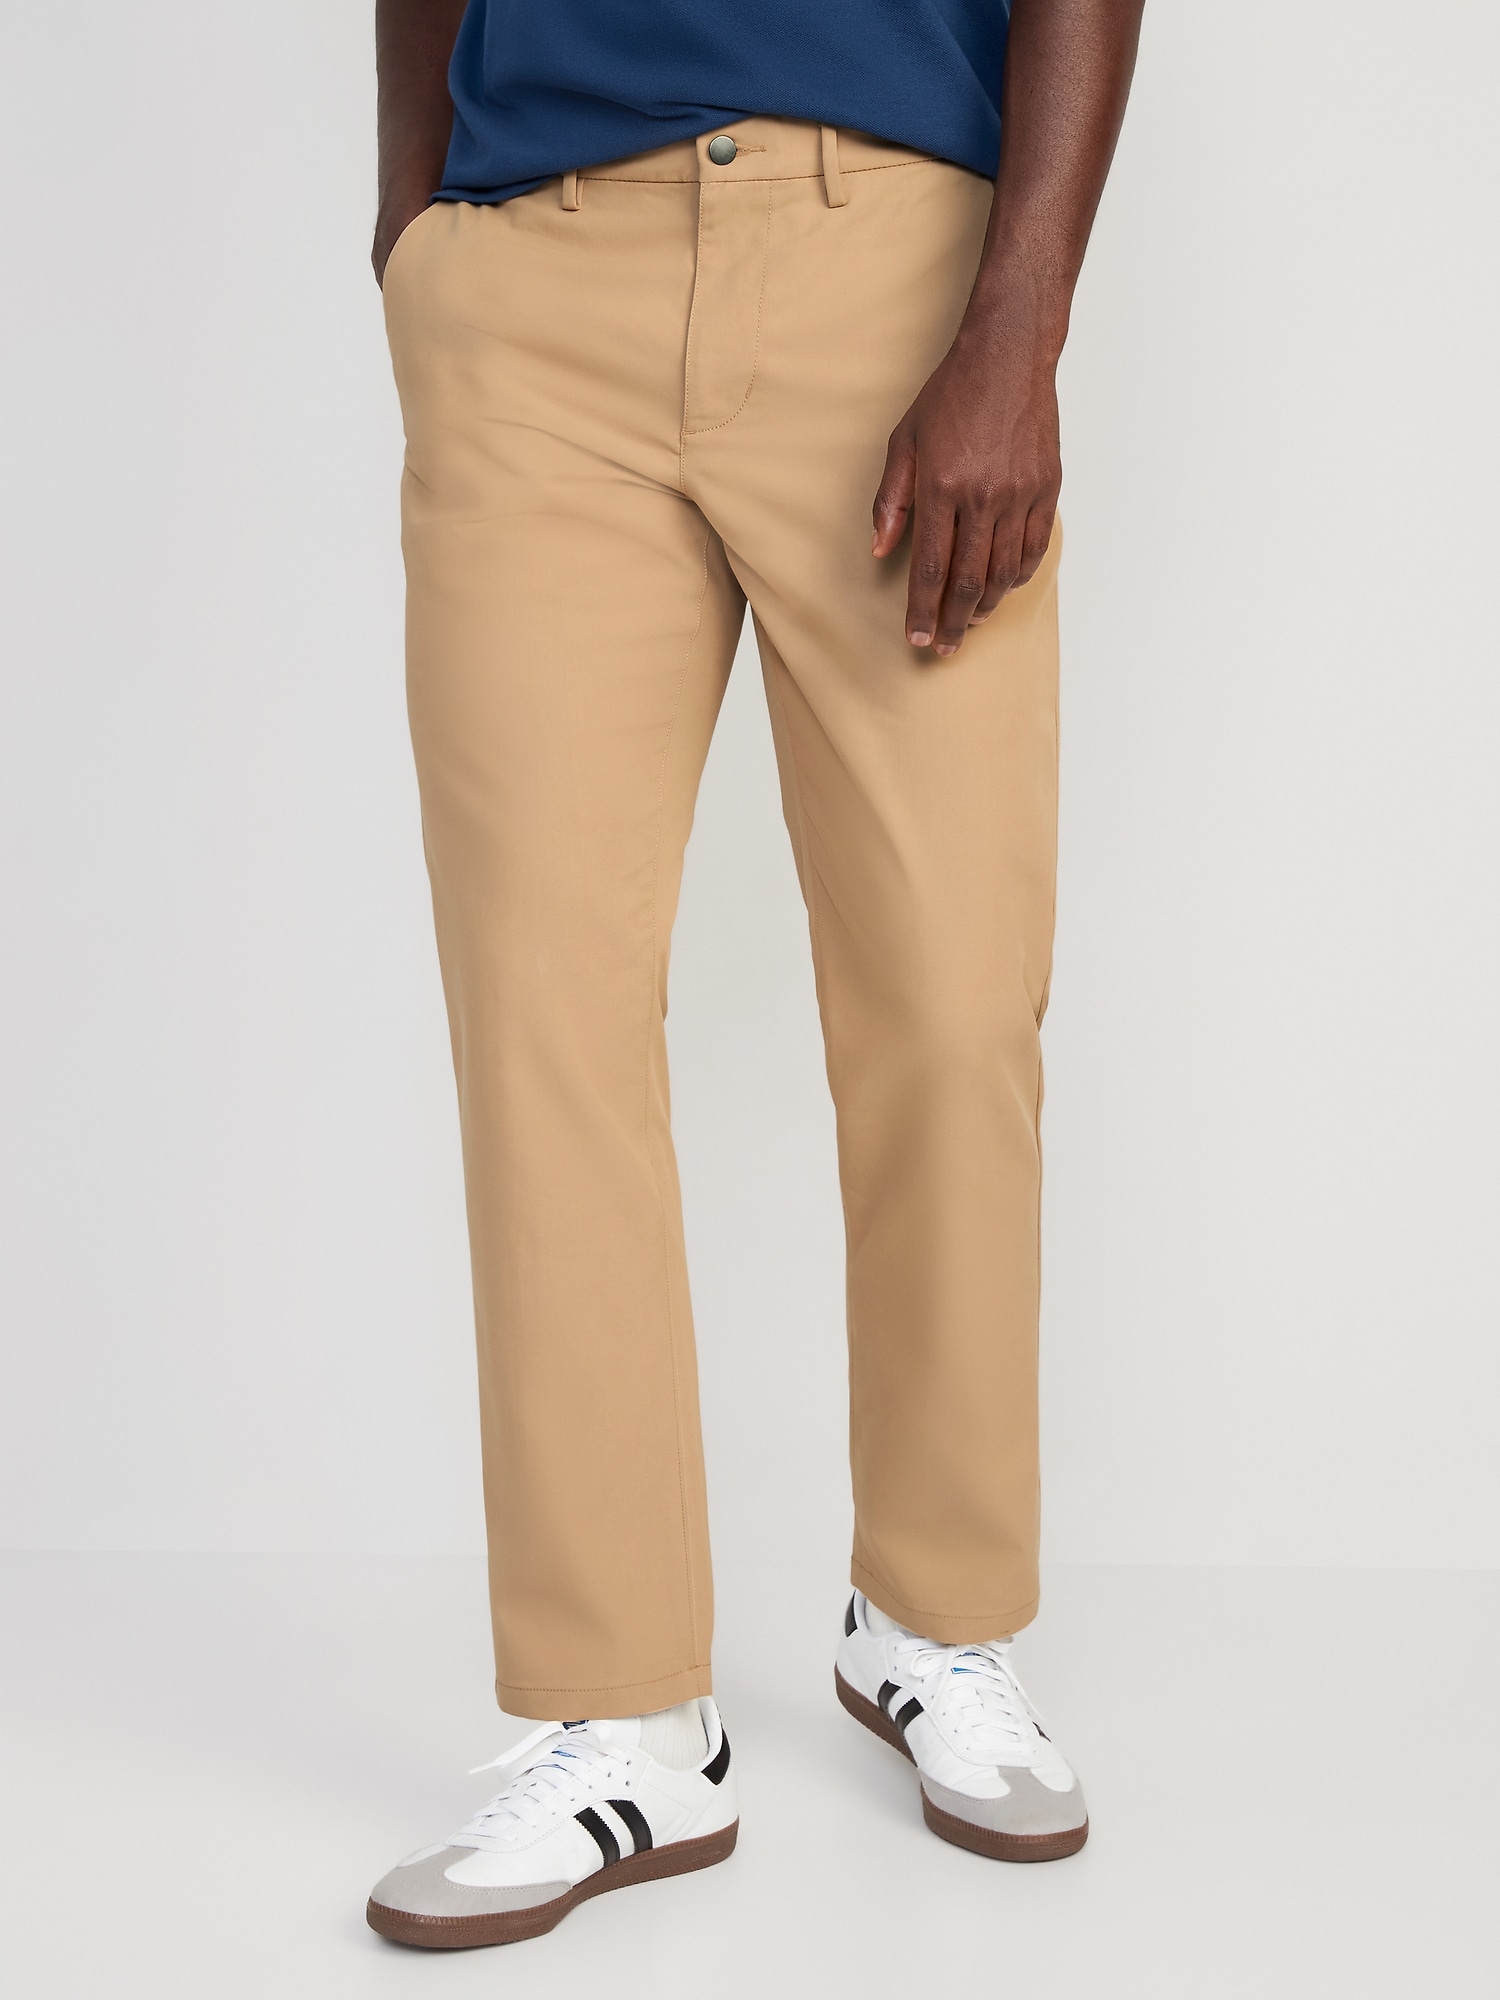 Slim Built-In Flex Ultimate Tech Chino Pants